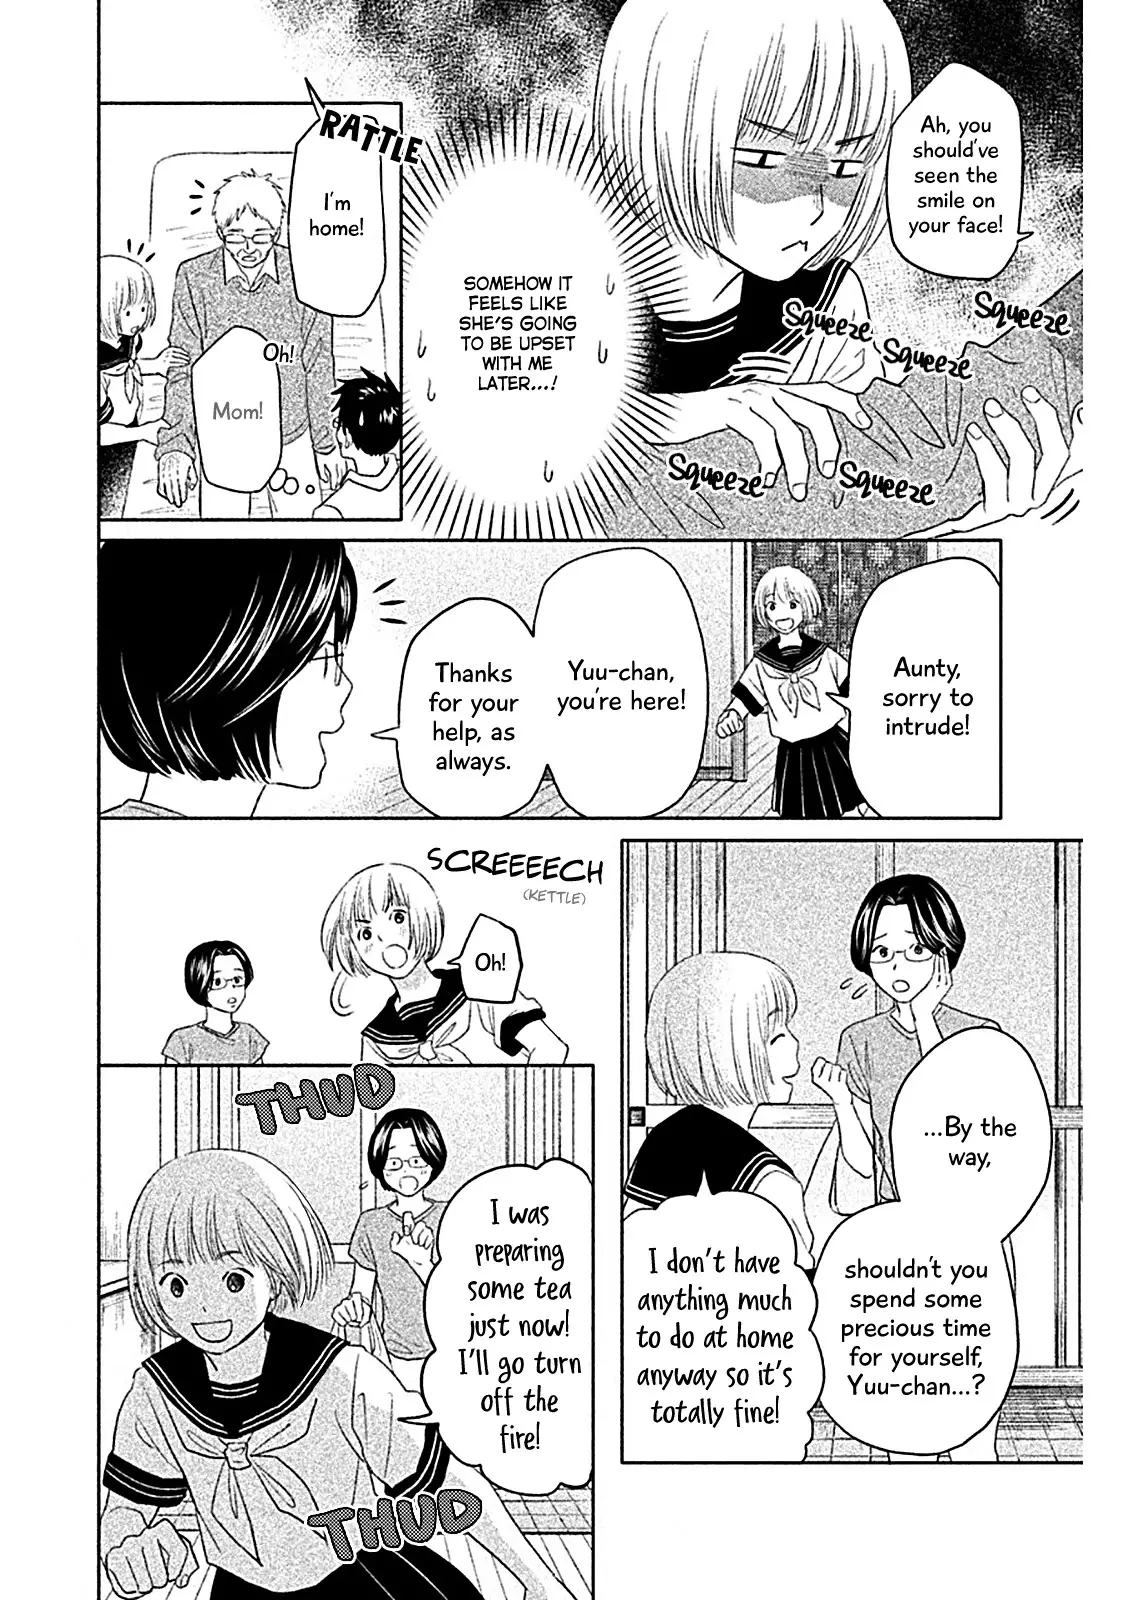 Chihayafuru: Middle School Arc - 8 page 16